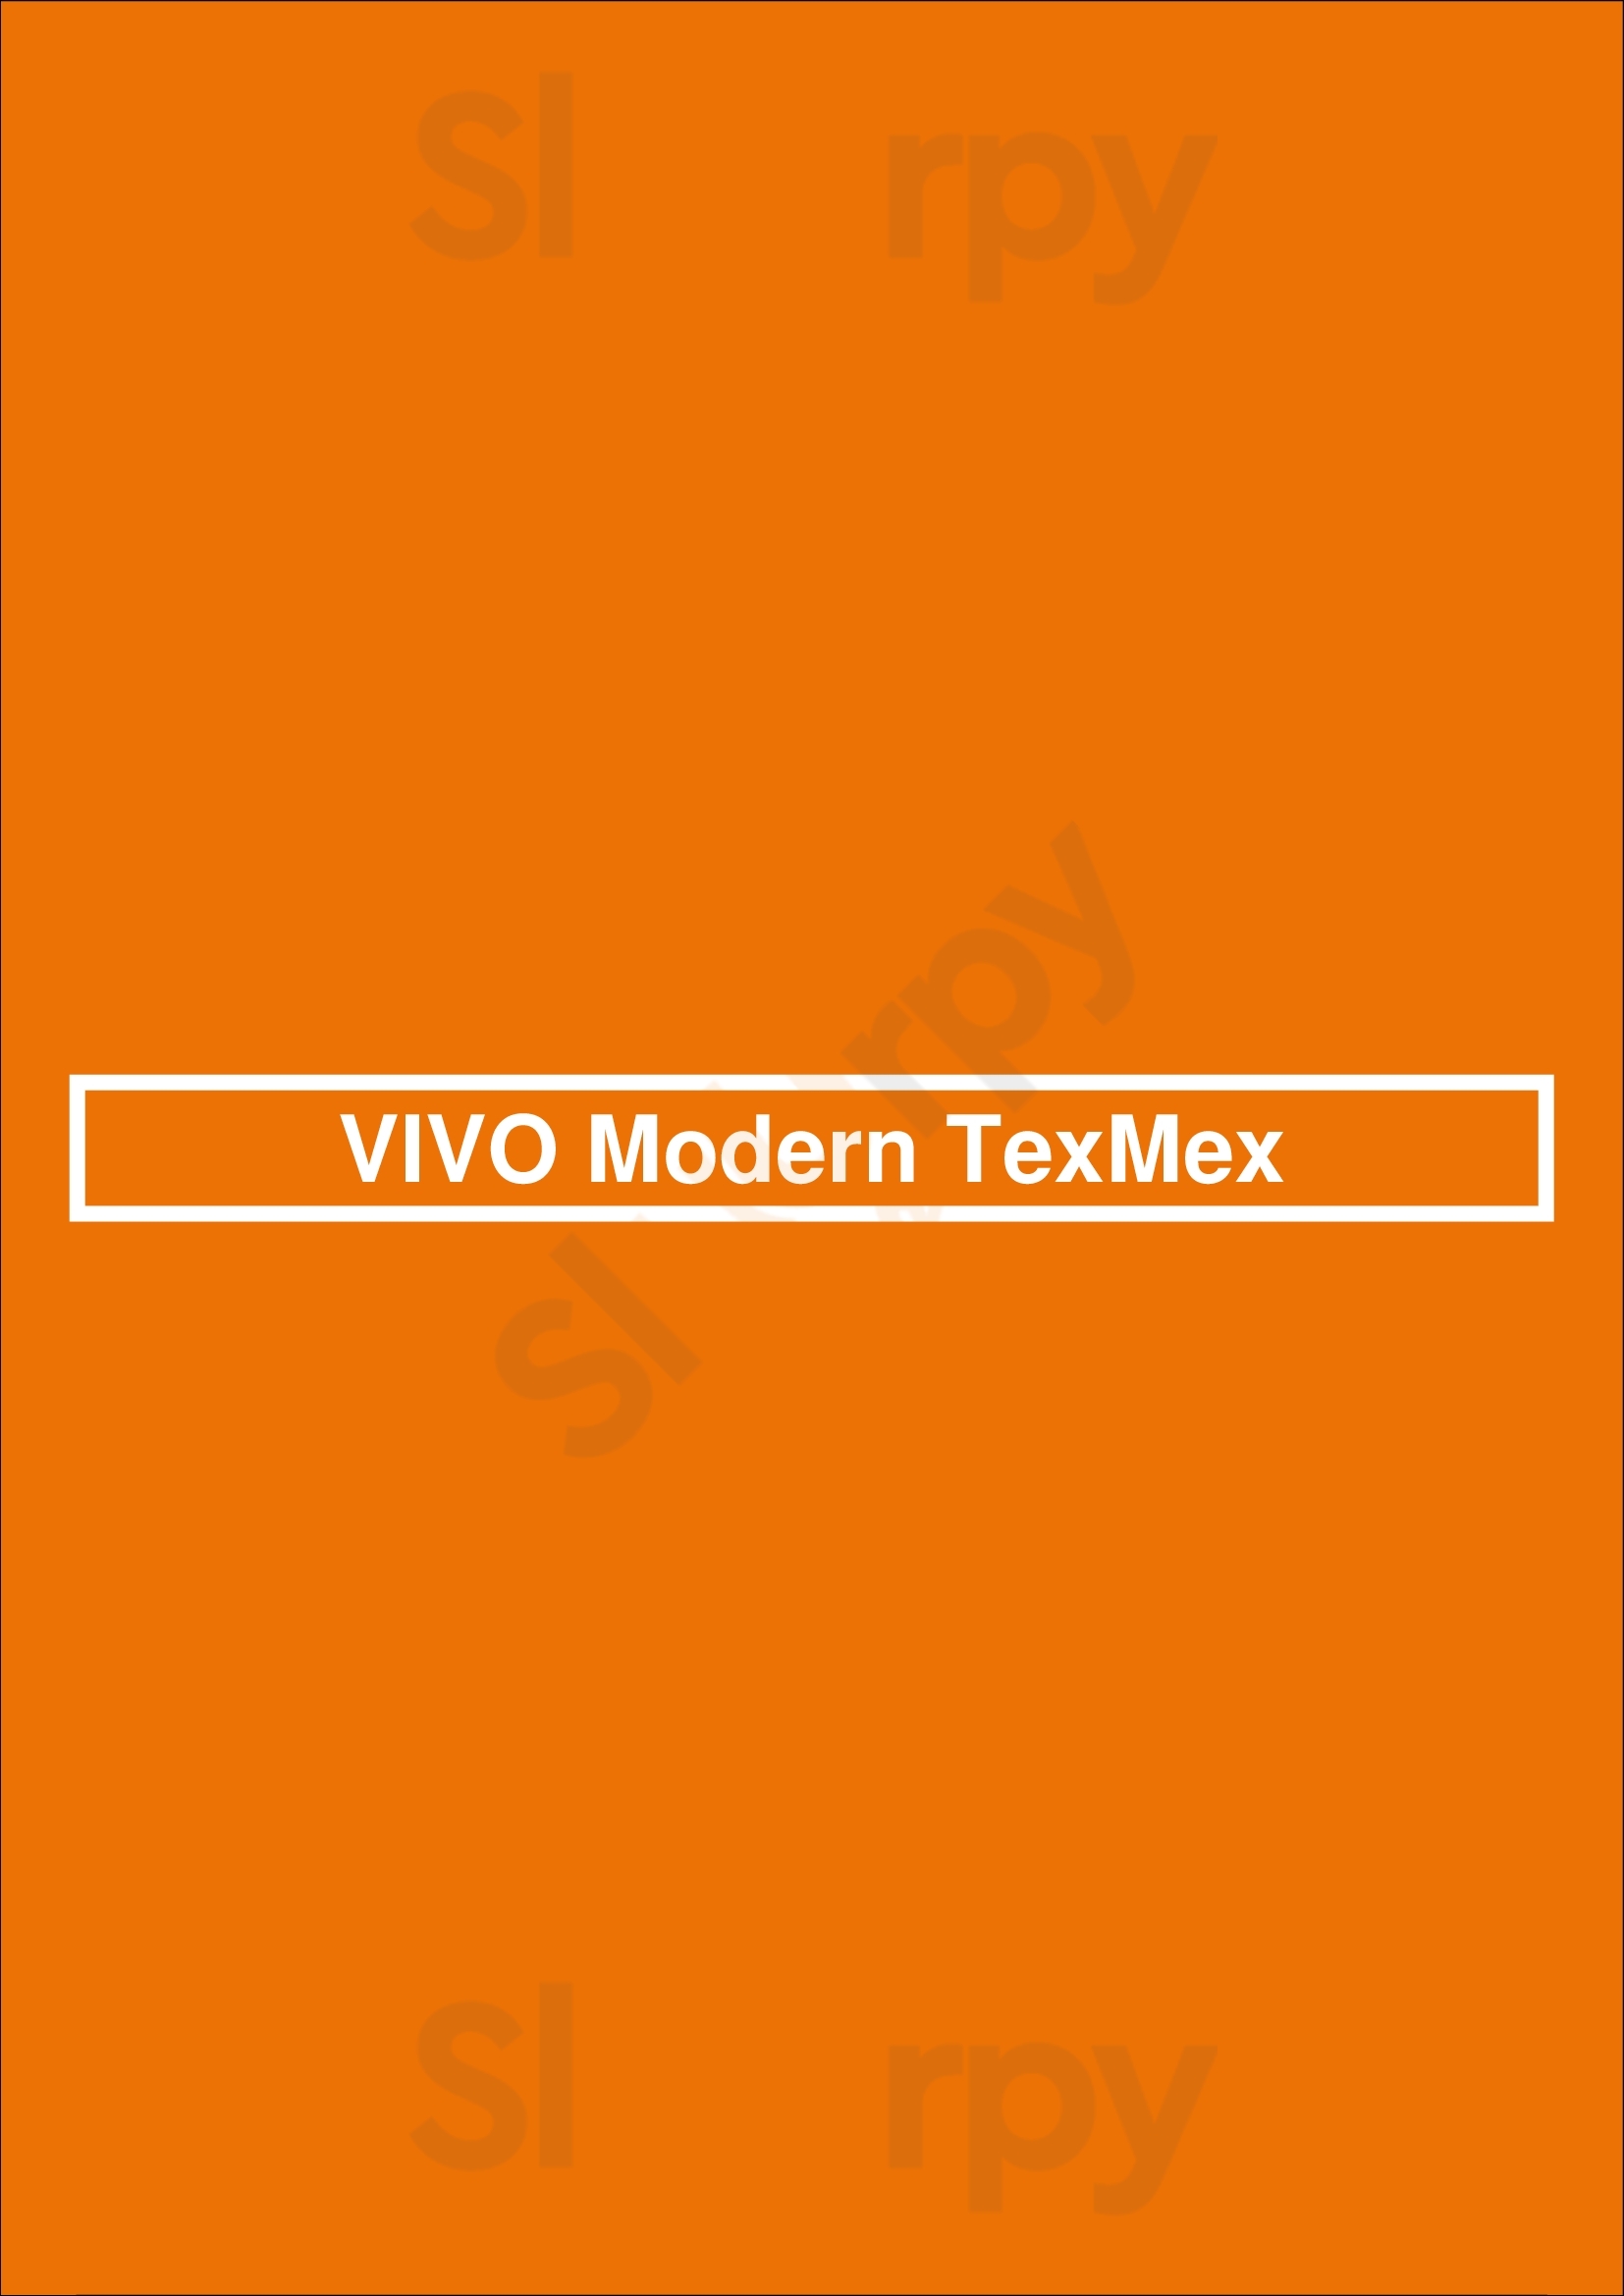 Vivo Modern Texmex Austin Menu - 1